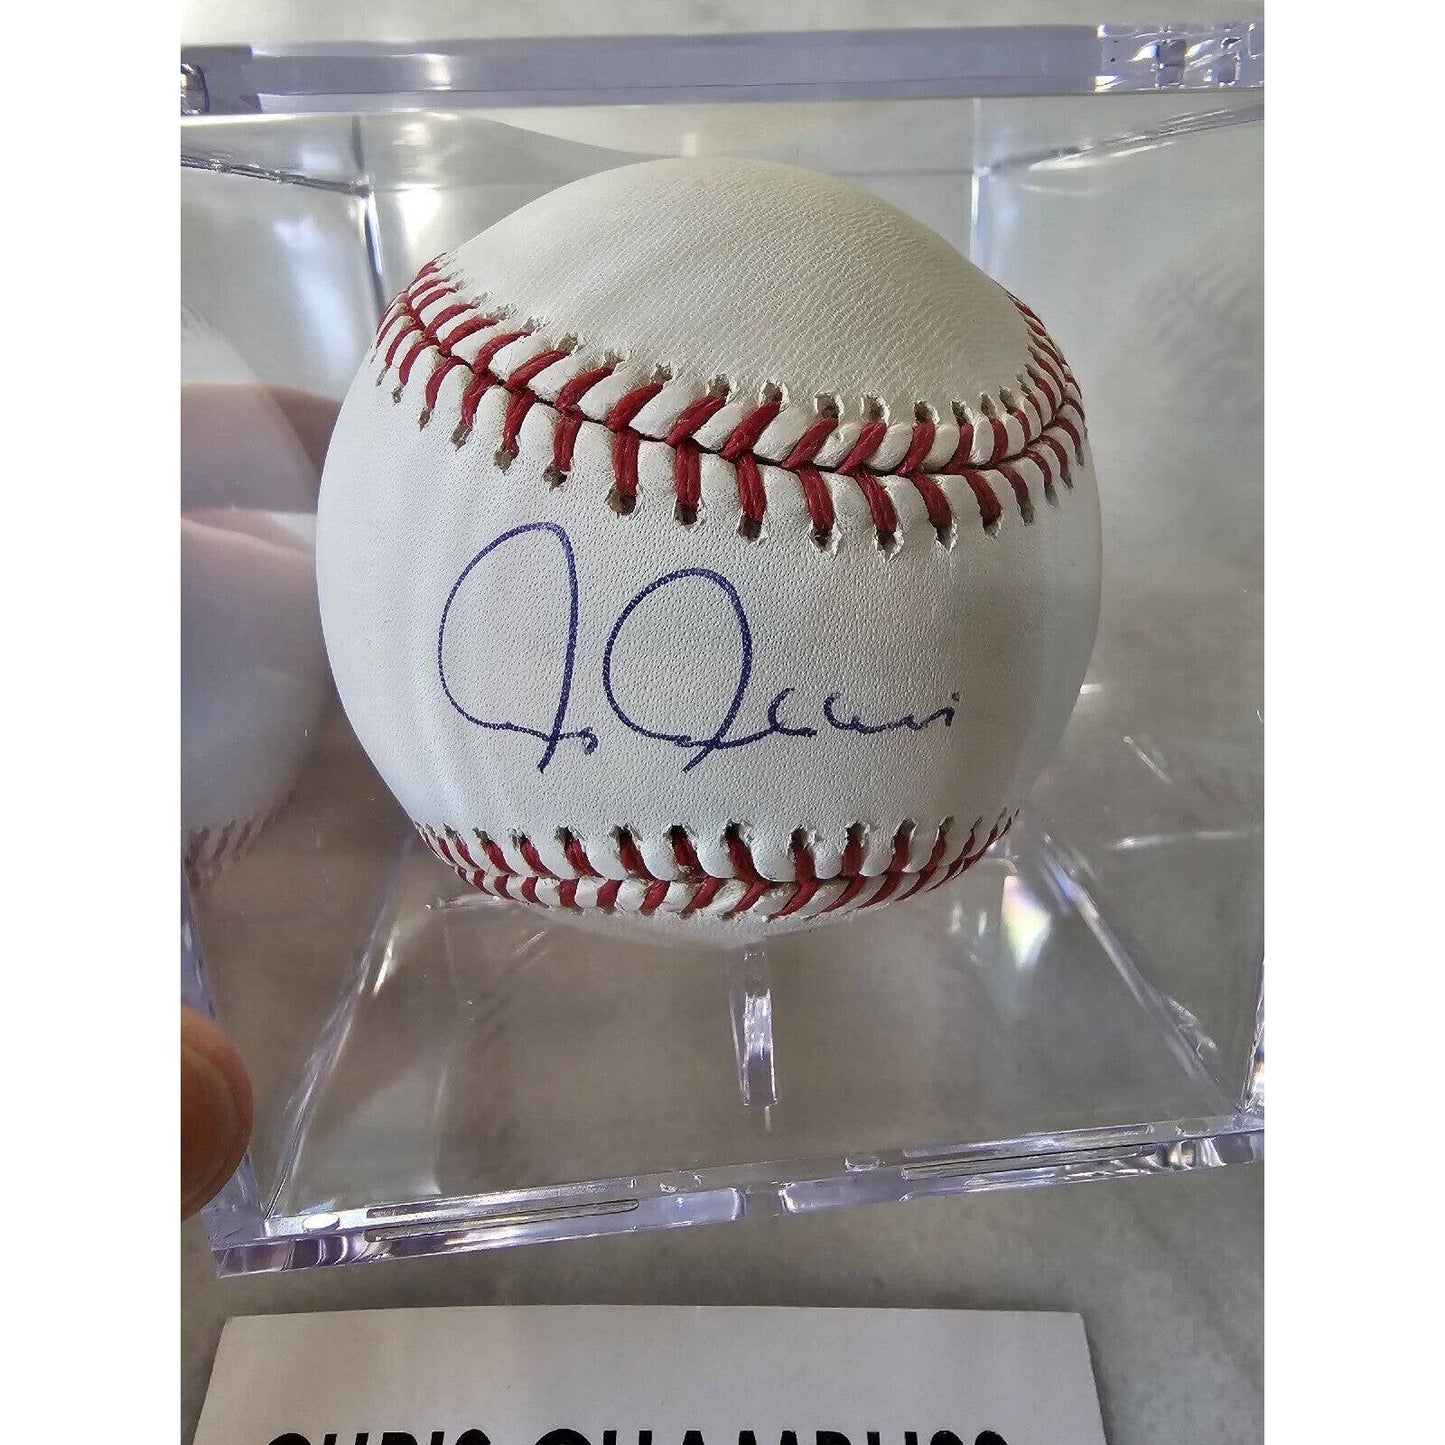 Chris Chambliss Autographed/Signed Baseball TRISTAR